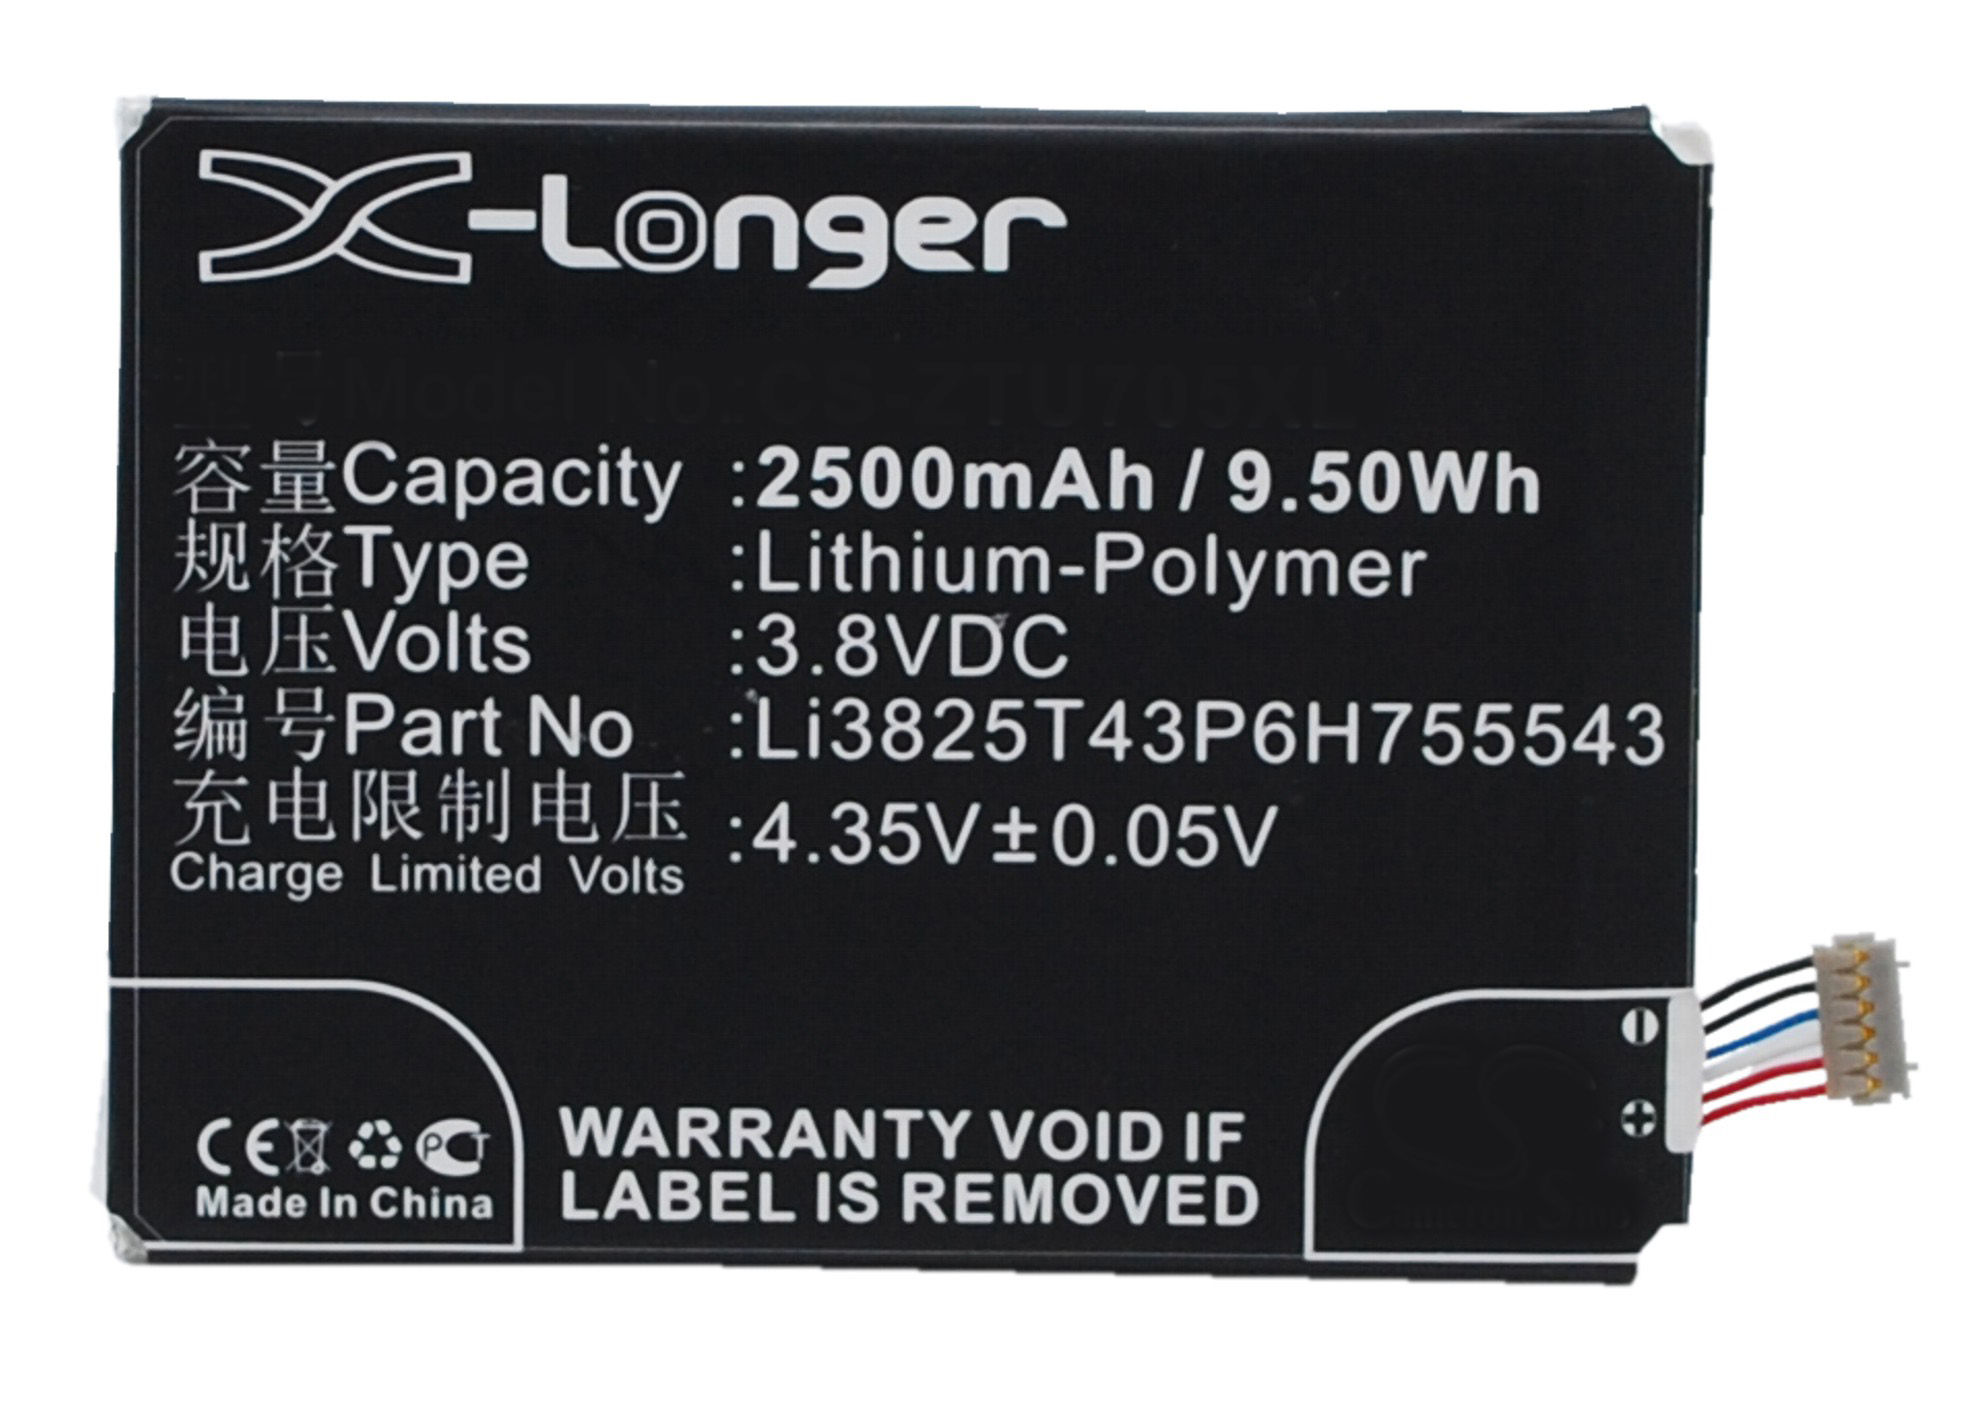 Synergy Digital Battery Compatible With Telstra Li3825T43P6H755543 Cellphone Battery - (Li-Pol, 3.8V, 2500 mAh / 9.50Wh)